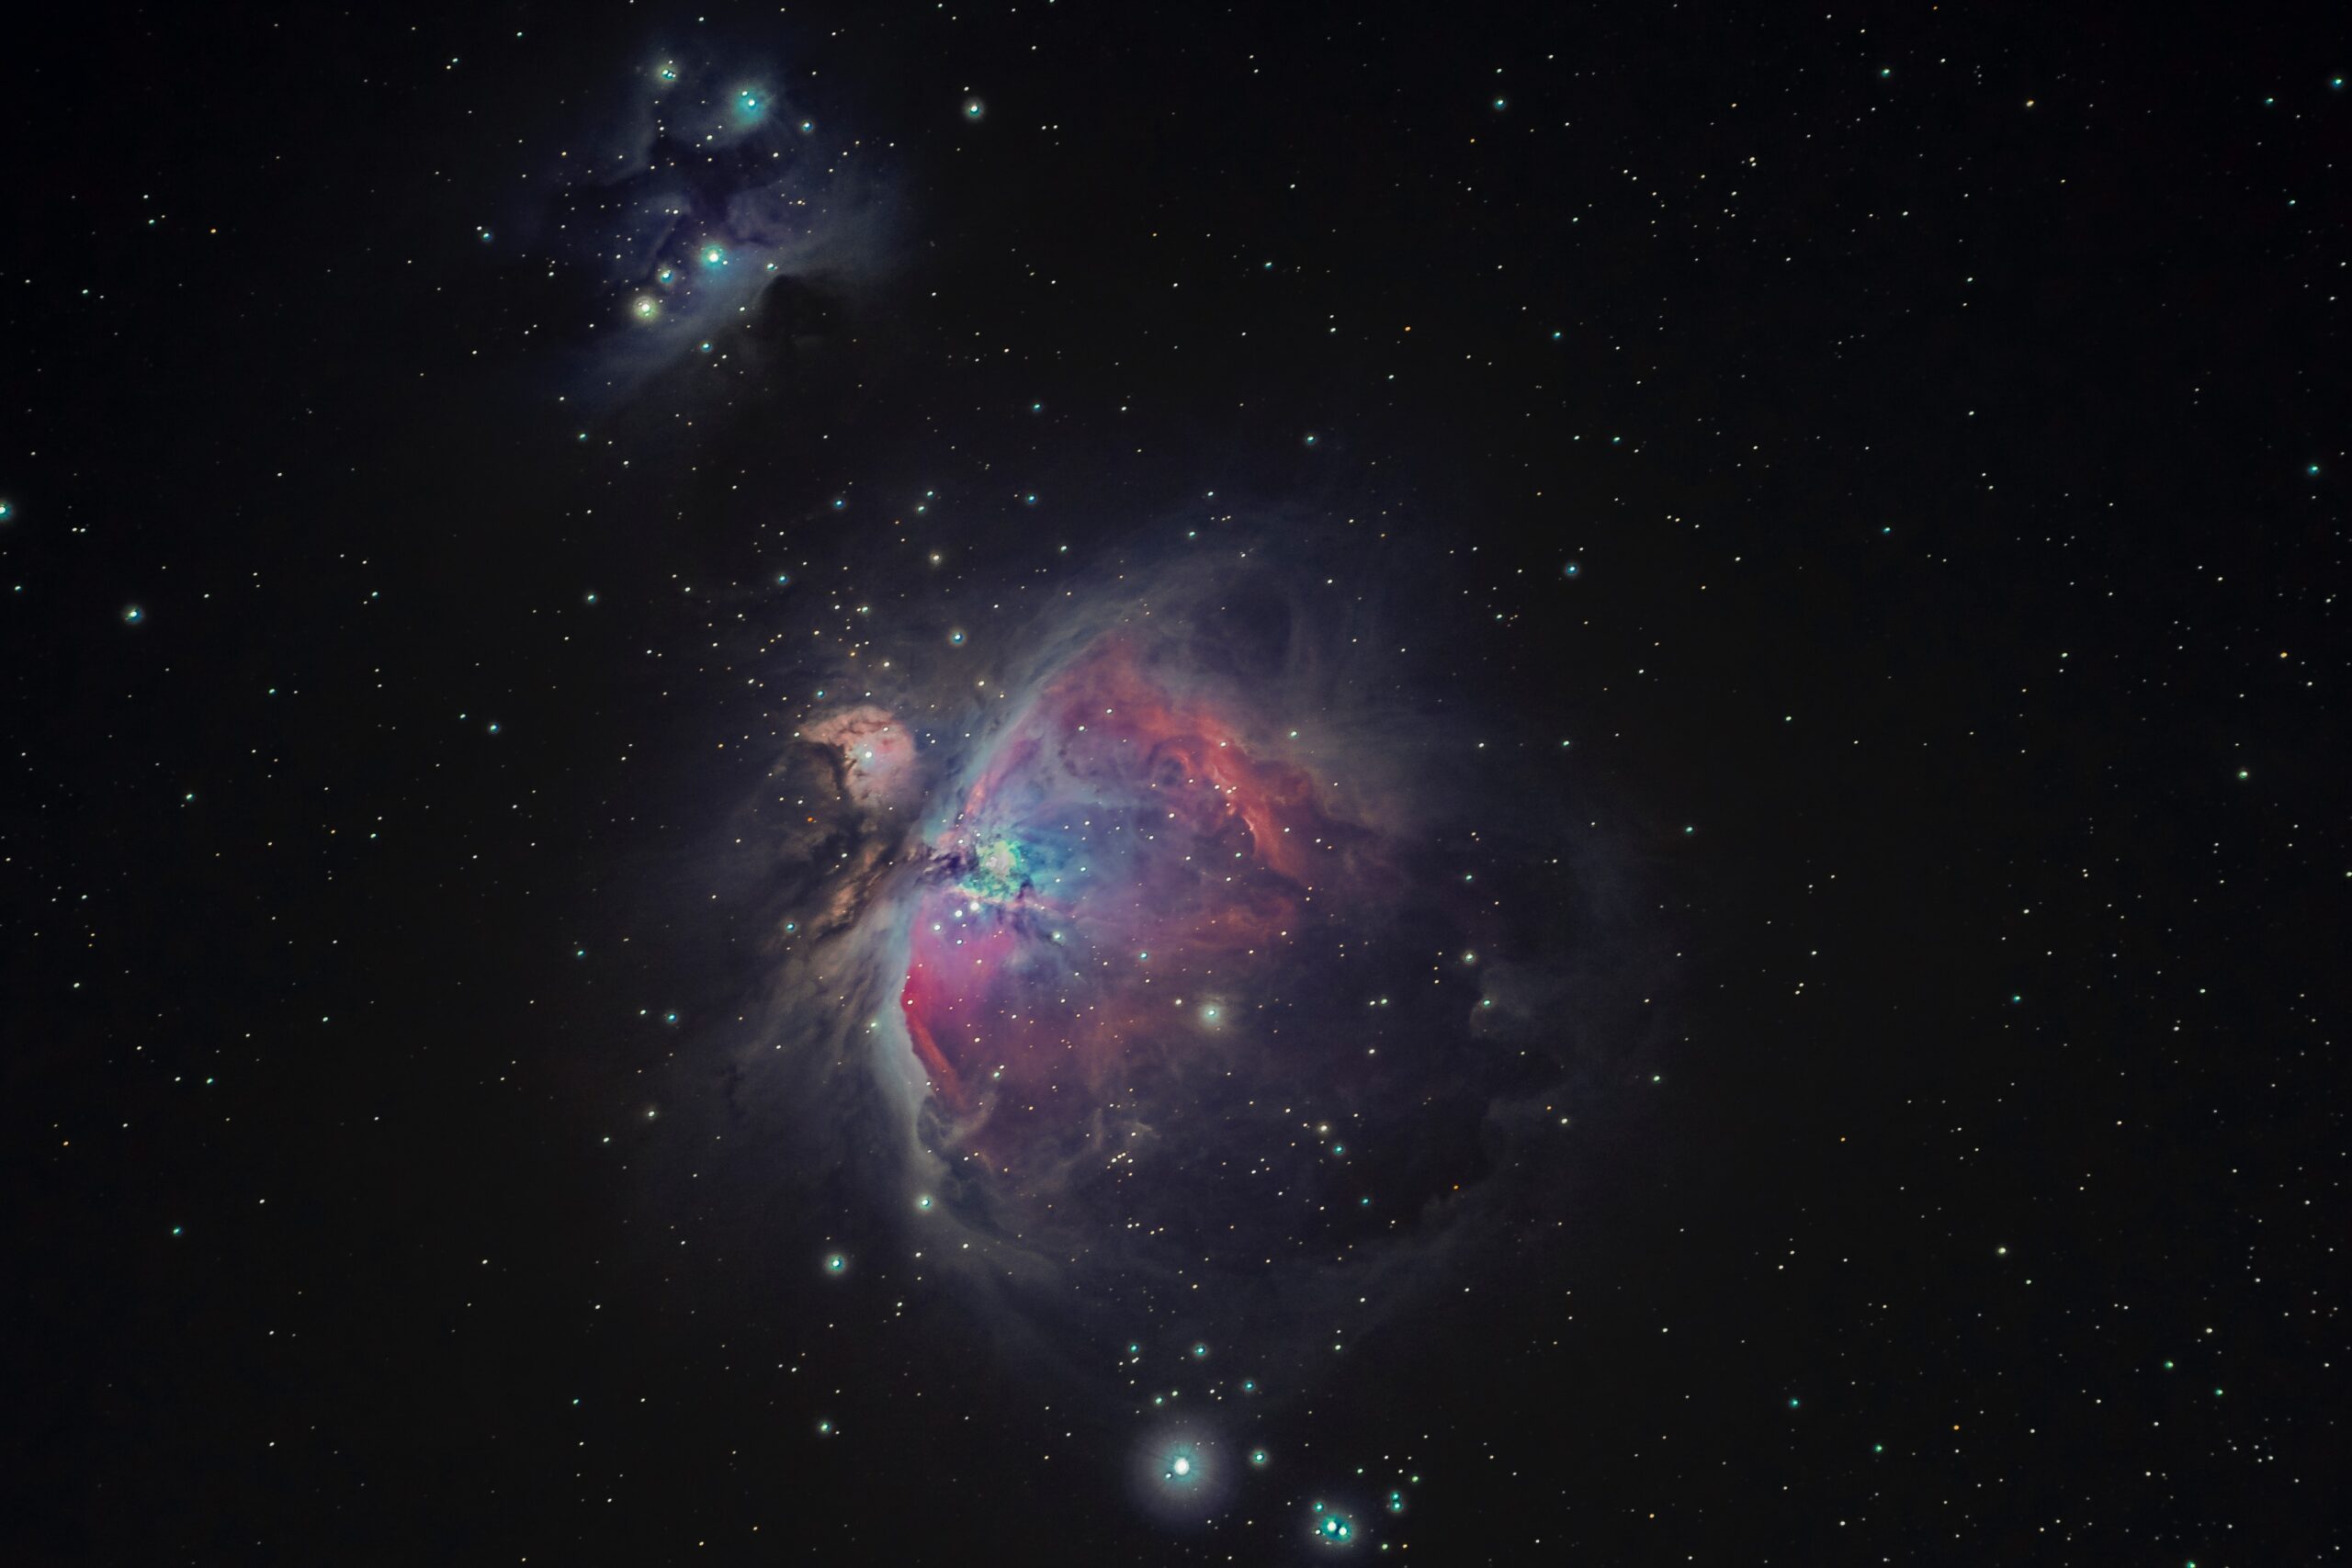 pink nebula, taken by bryan goff cosmo energy, cosmoenergetica